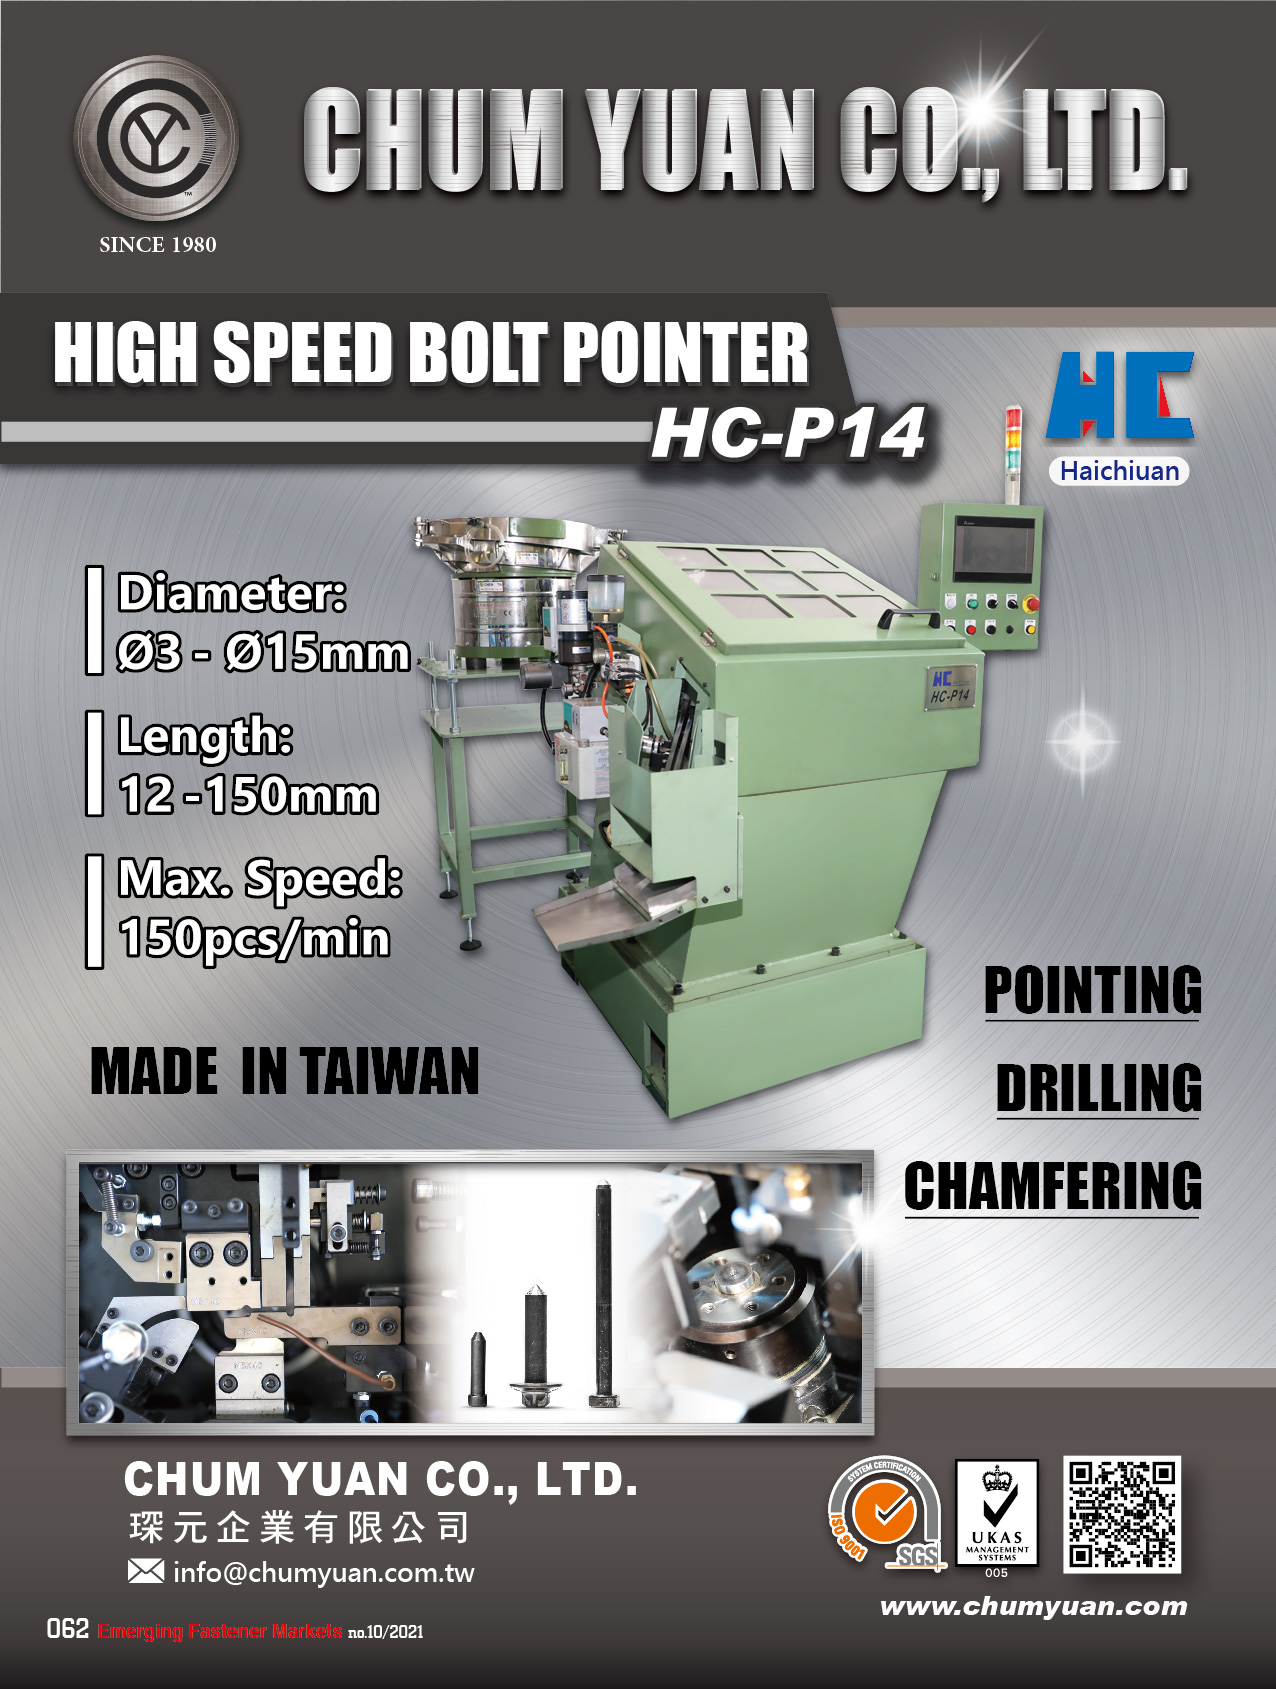 Fastener Maker (Haichiuan) High Speed Bolt Pointer